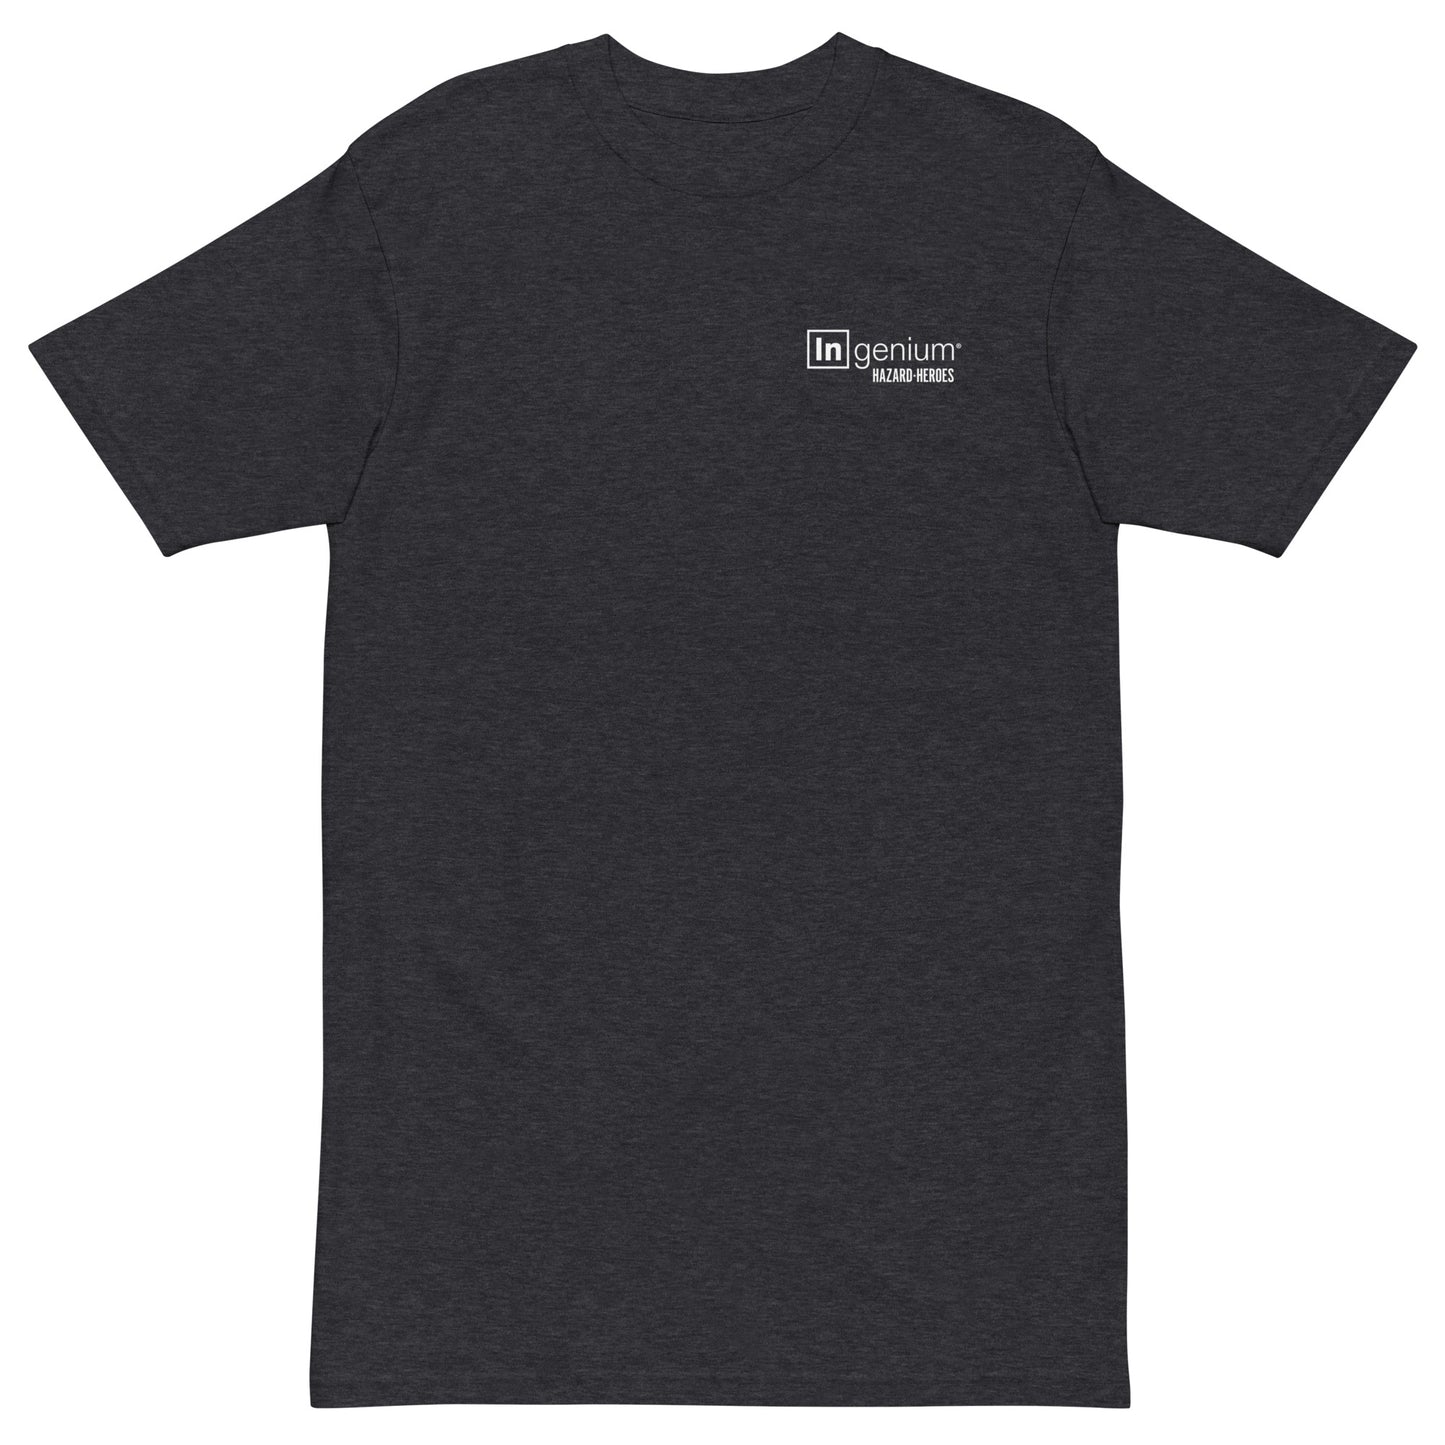 Unisex Heavyweight T-shirt (100% Cotton)